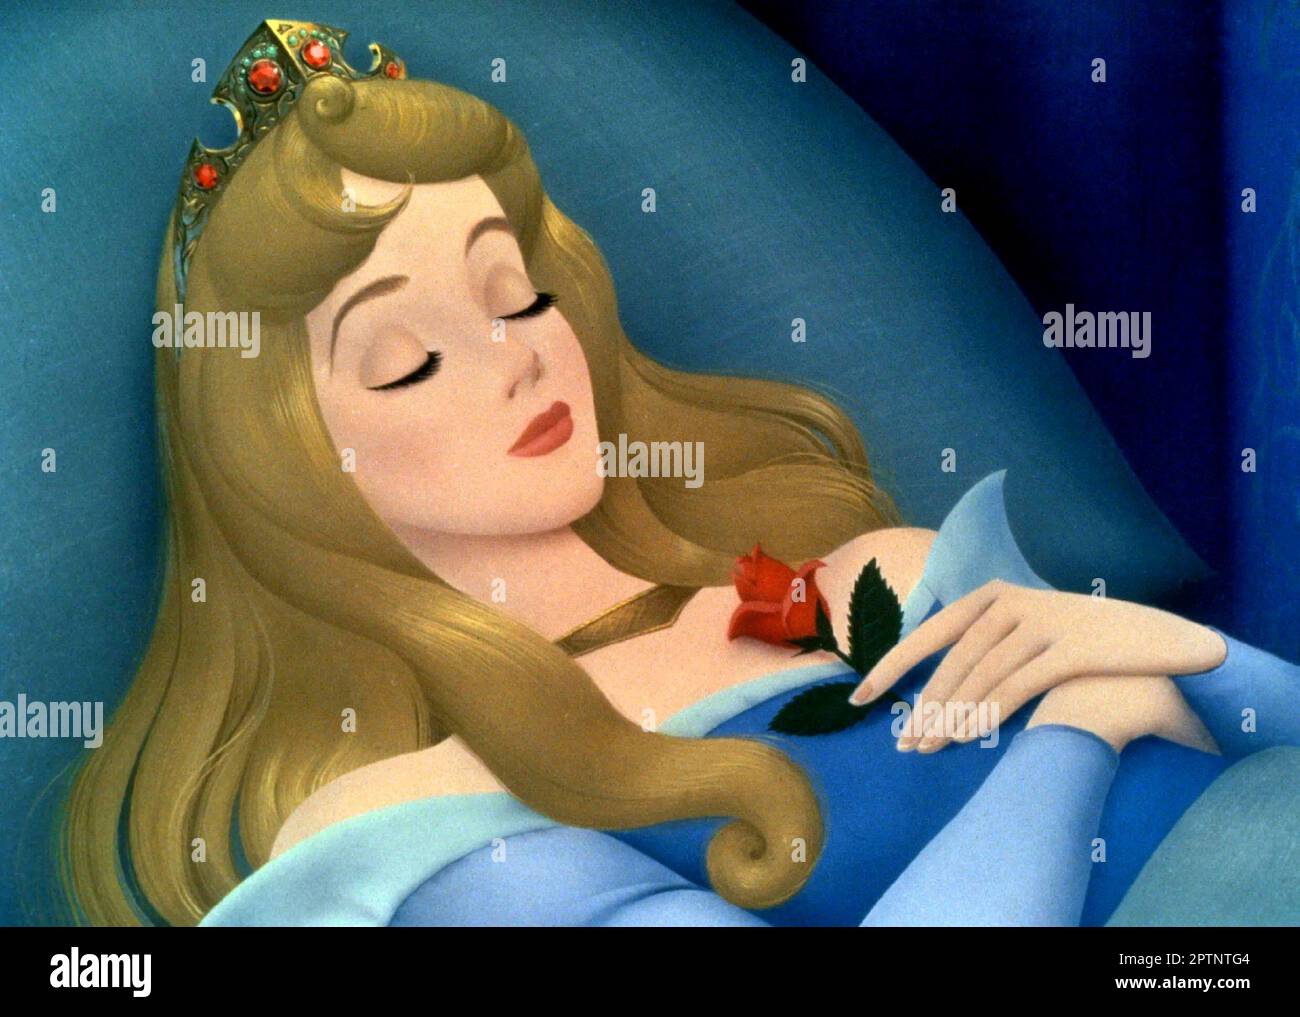 https://c8.alamy.com/comp/2PTNTG4/sleeping-beauty-princess-aurora-2PTNTG4.jpg